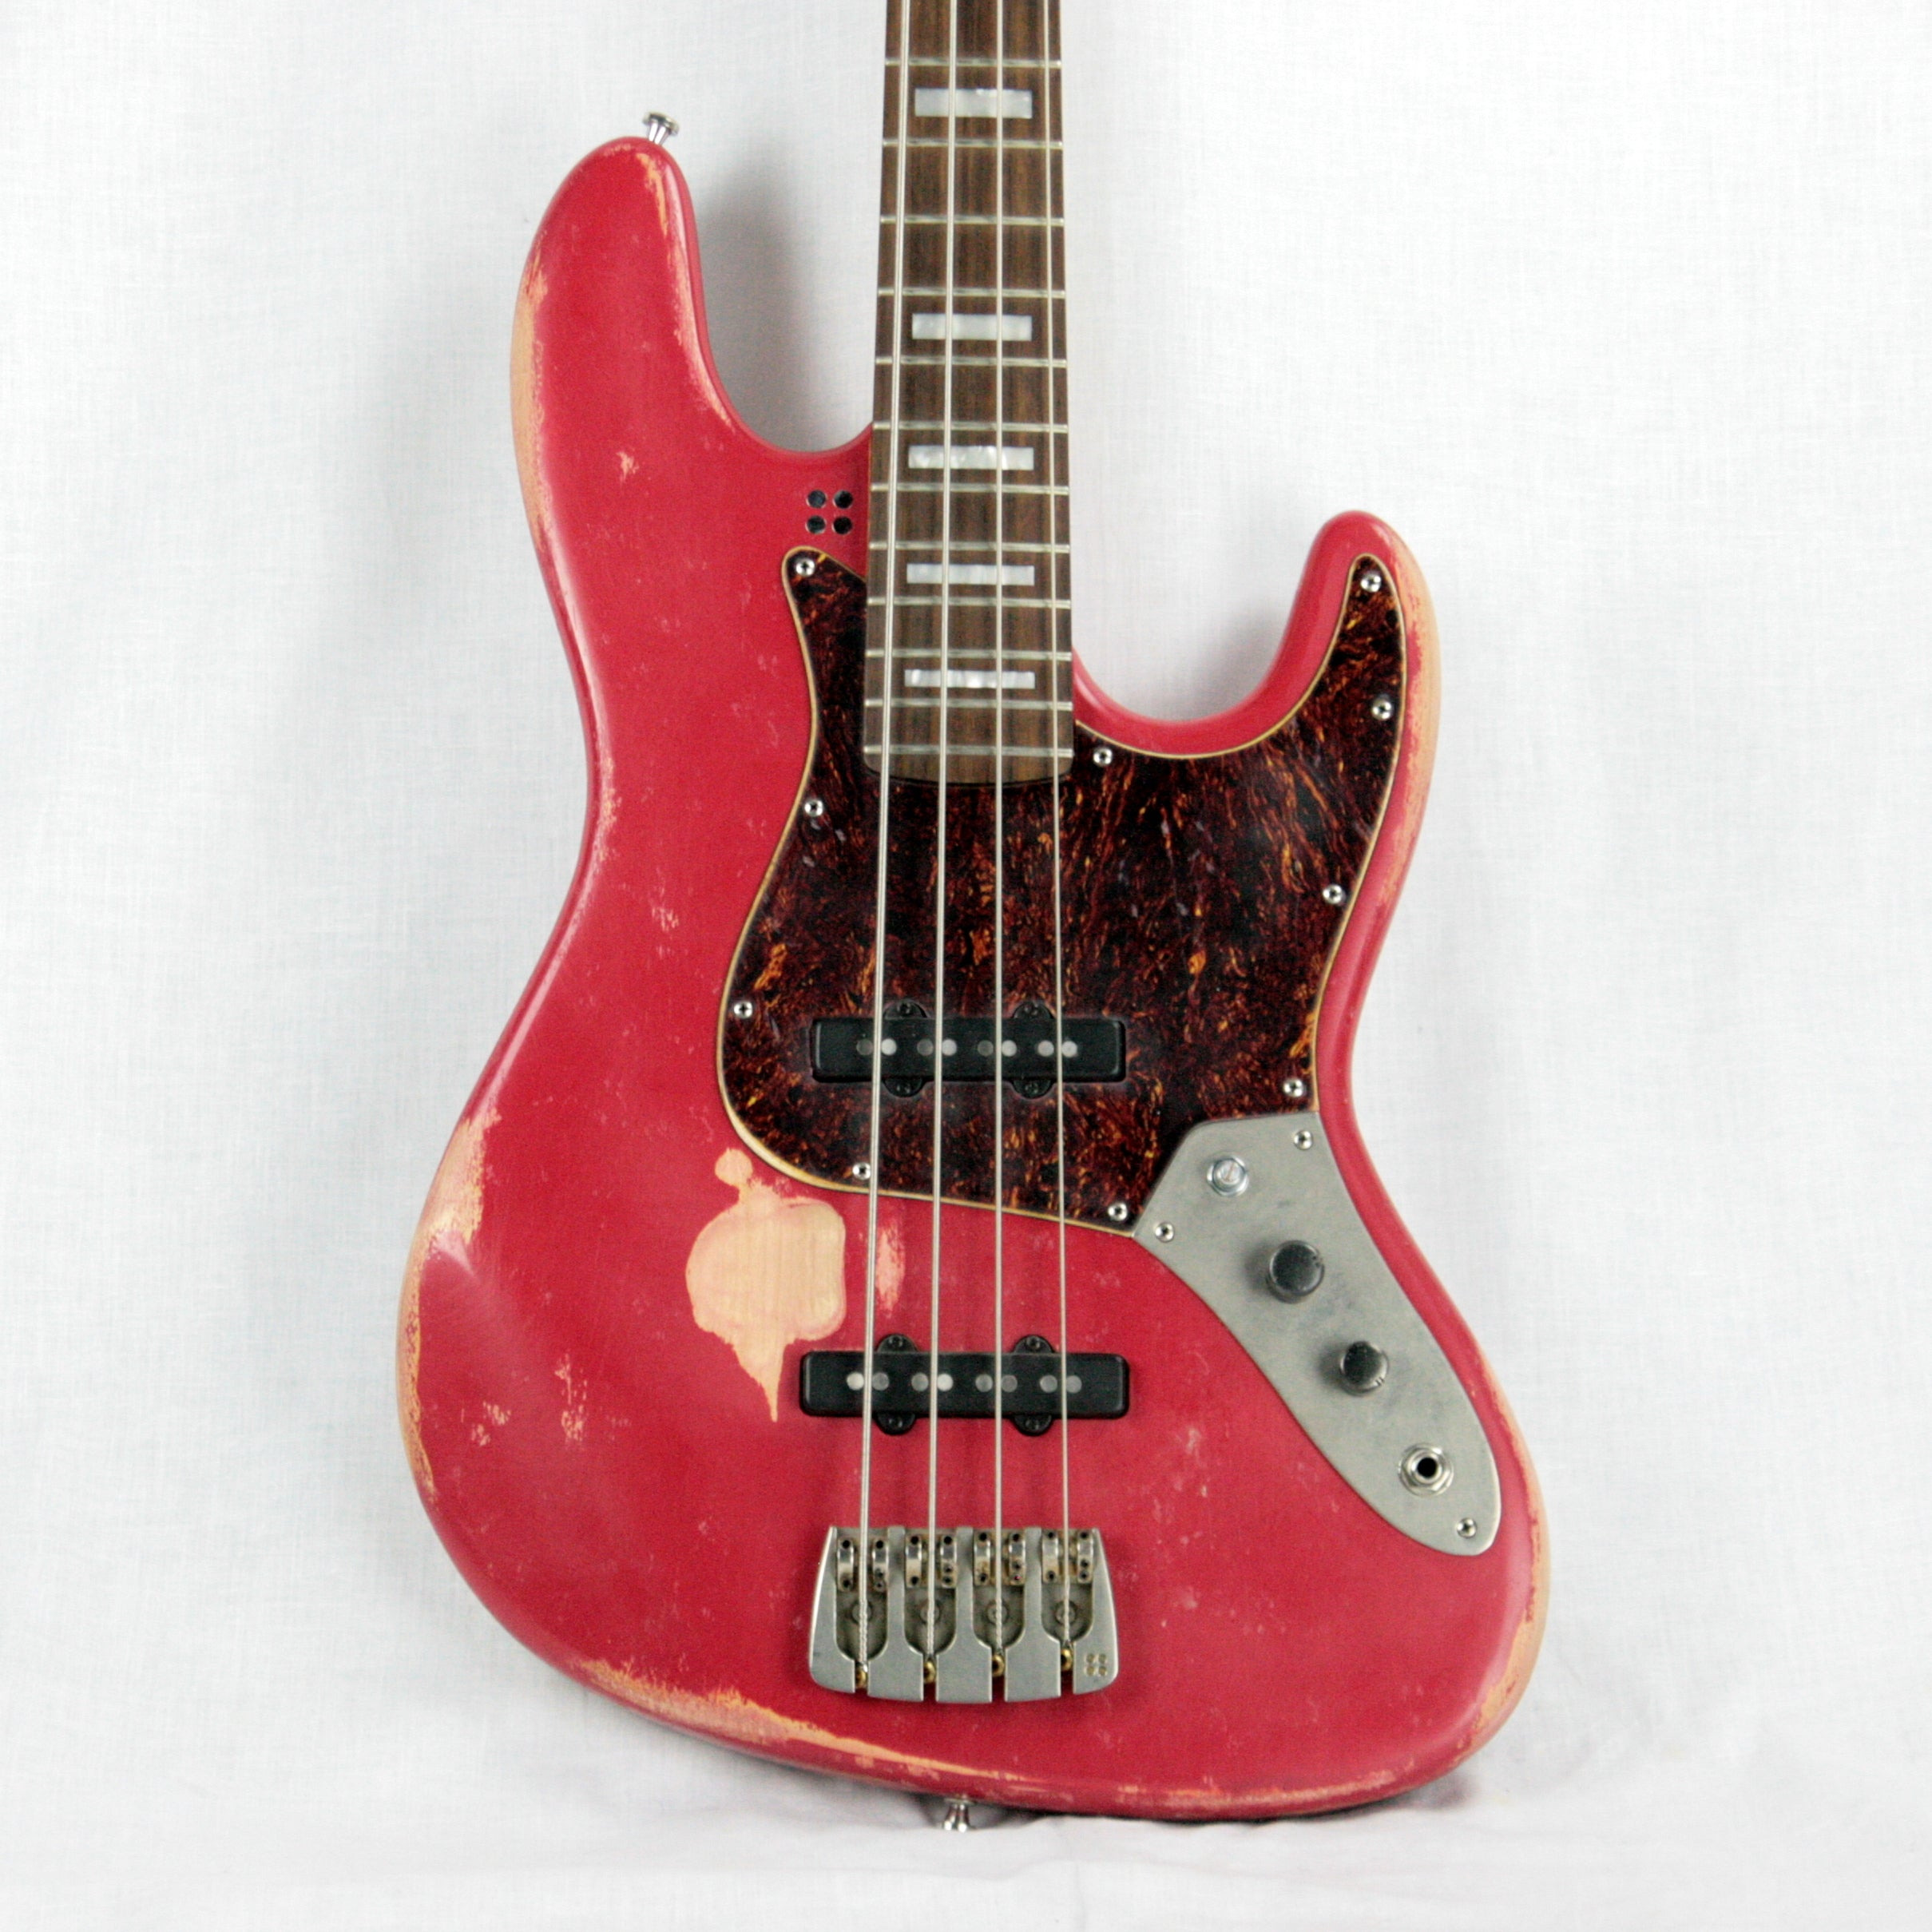 *SOLD*  🔵 2012 Sandberg Marlowe DK Signature Model Jazz Bass! German-Made Aged Red!